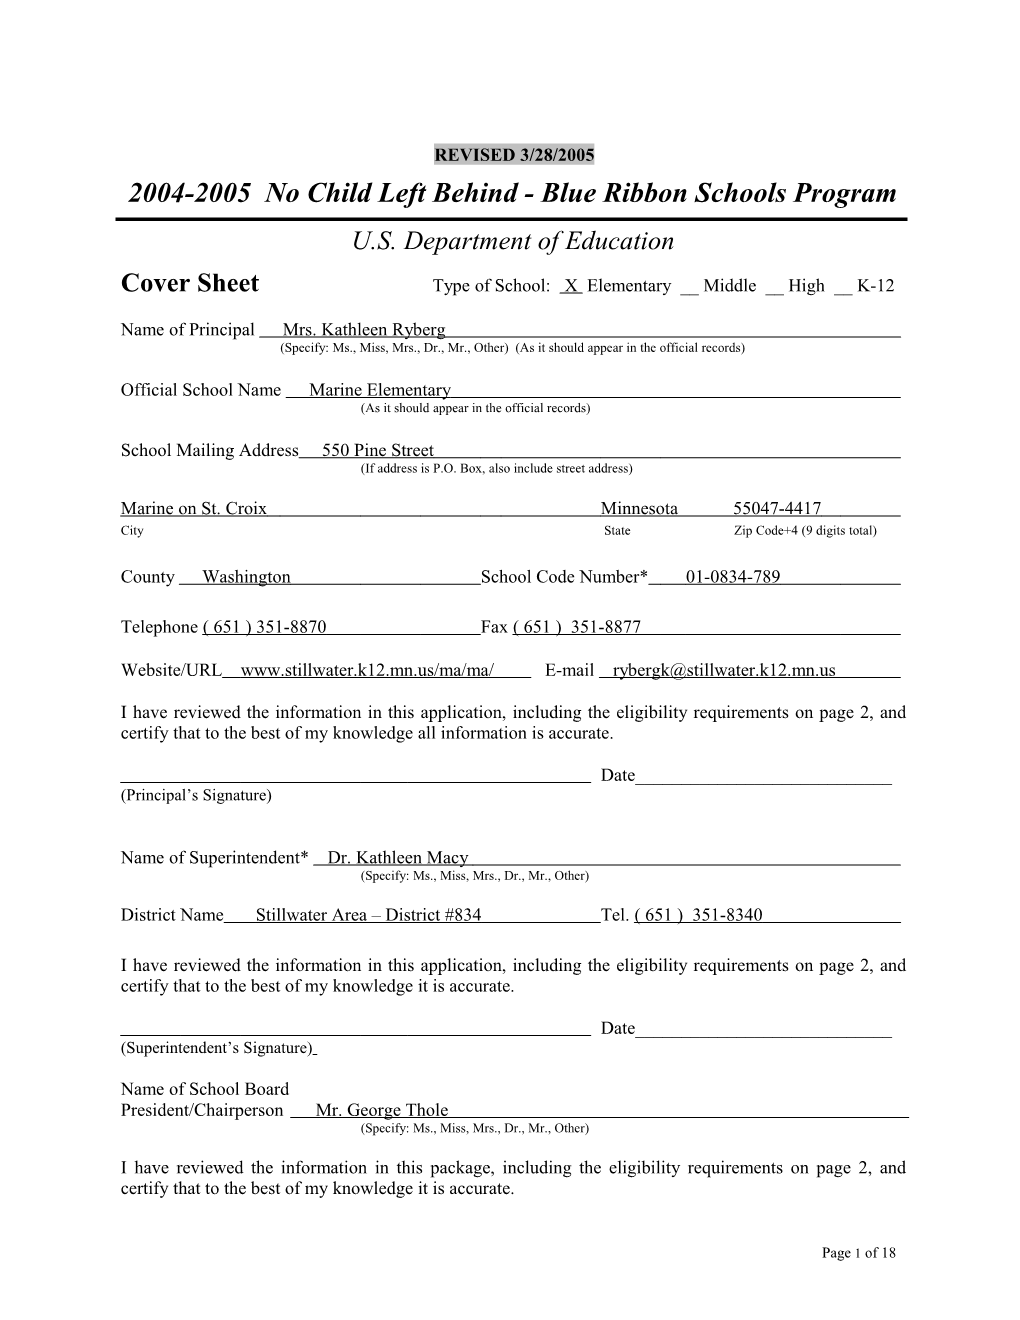 Marine Elementary School Application: 2004-2005, No Child Left Behind - Blue Ribbon Schools